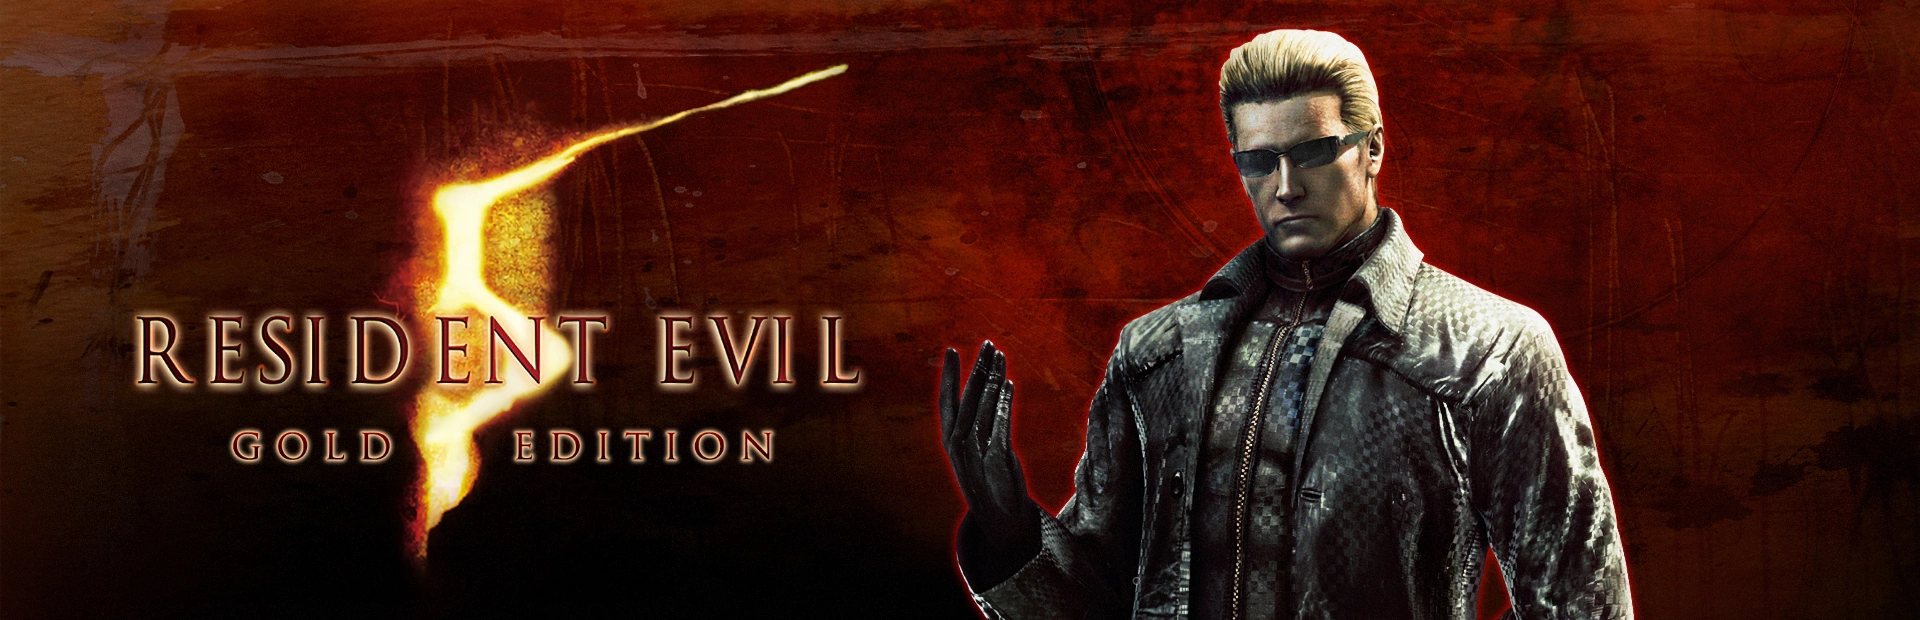 Resident.Evil 5.Gold .Edition.banner2